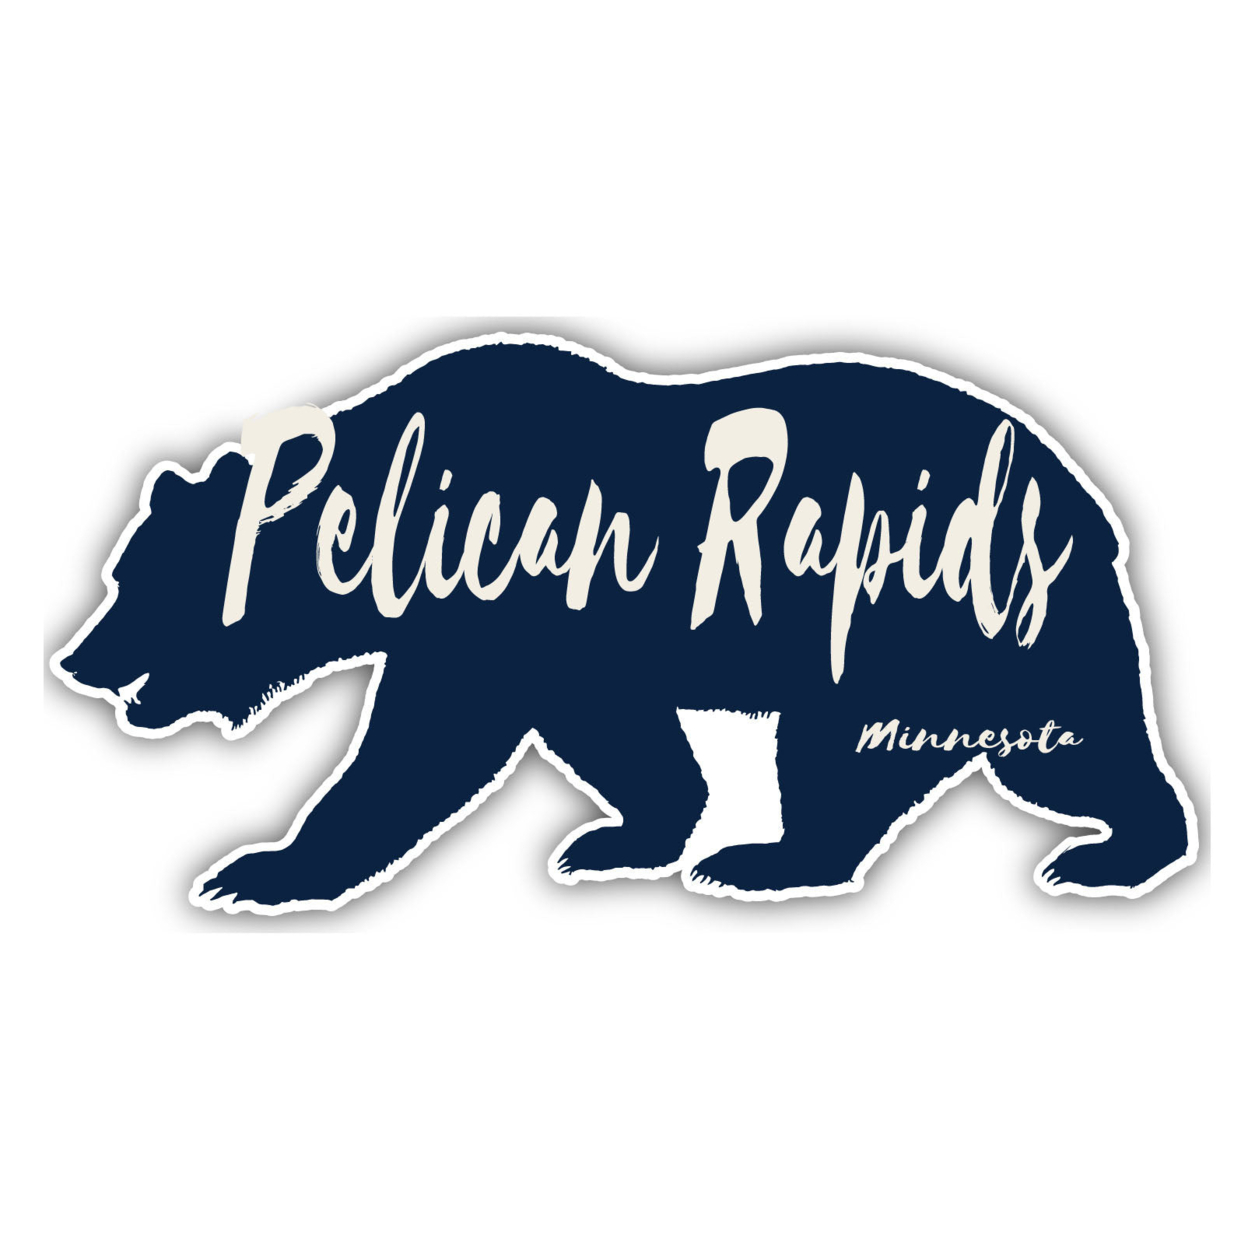 Pelican Rapids Minnesota Souvenir Decorative Stickers (Choose Theme And Size) - Single Unit, 2-Inch, Bear